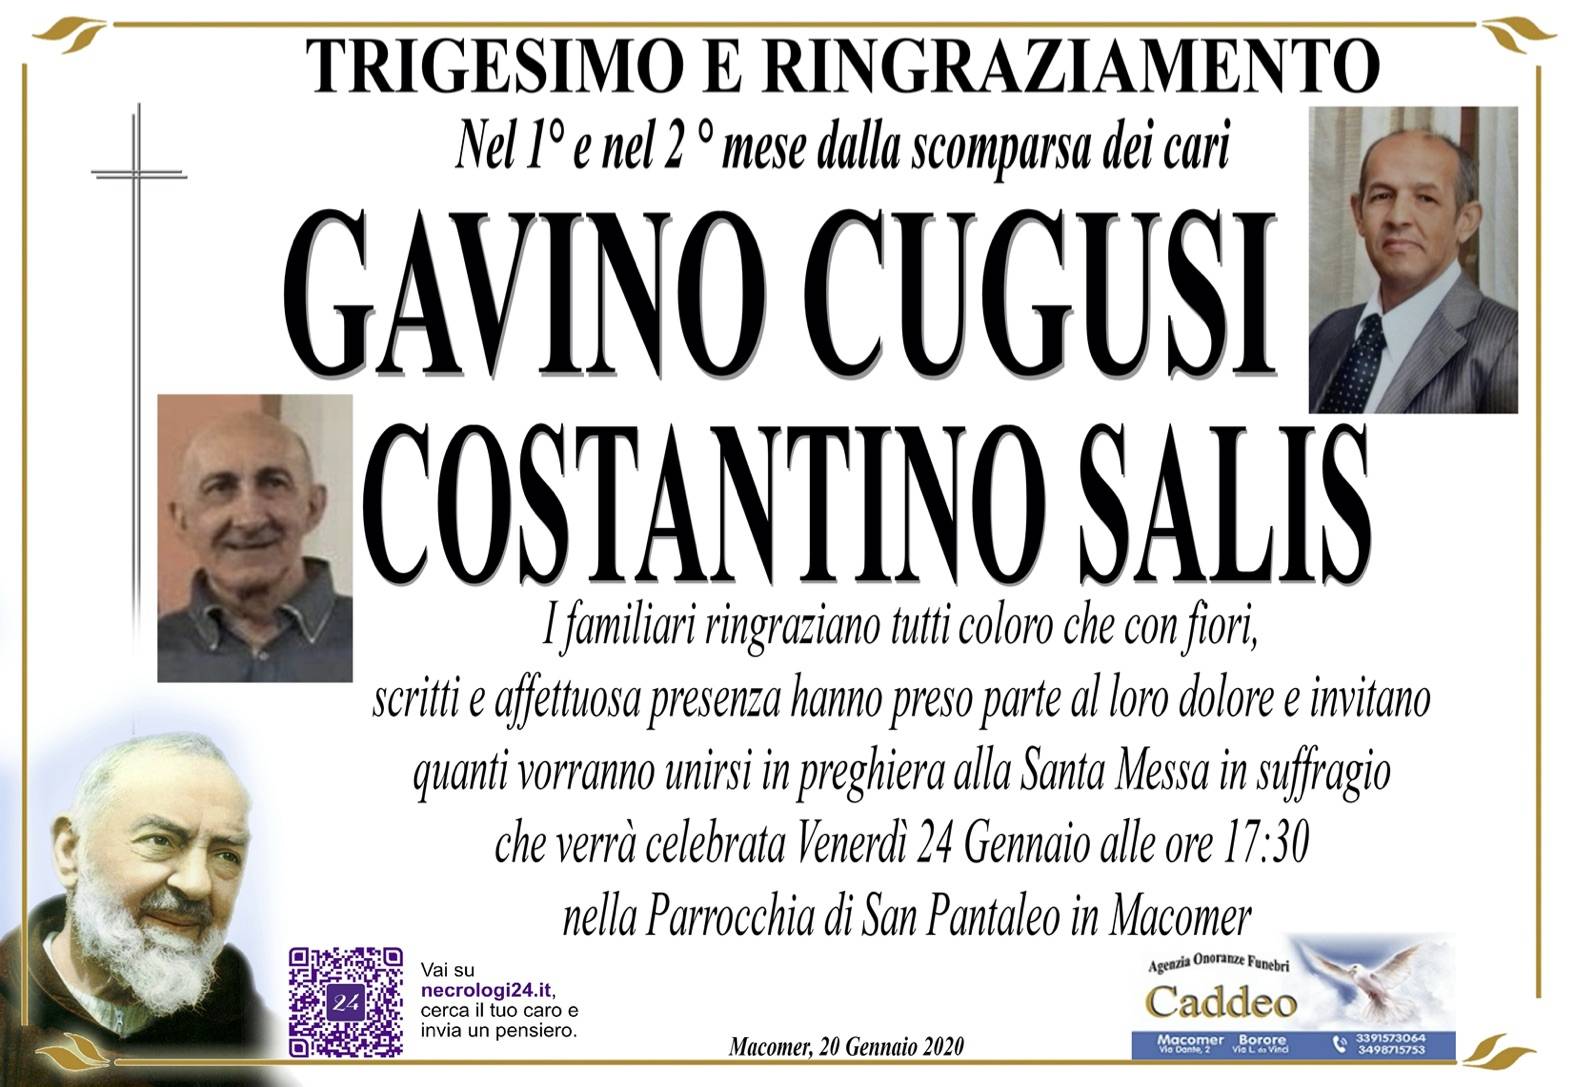 Gavino Cugusi - Costantino Salis